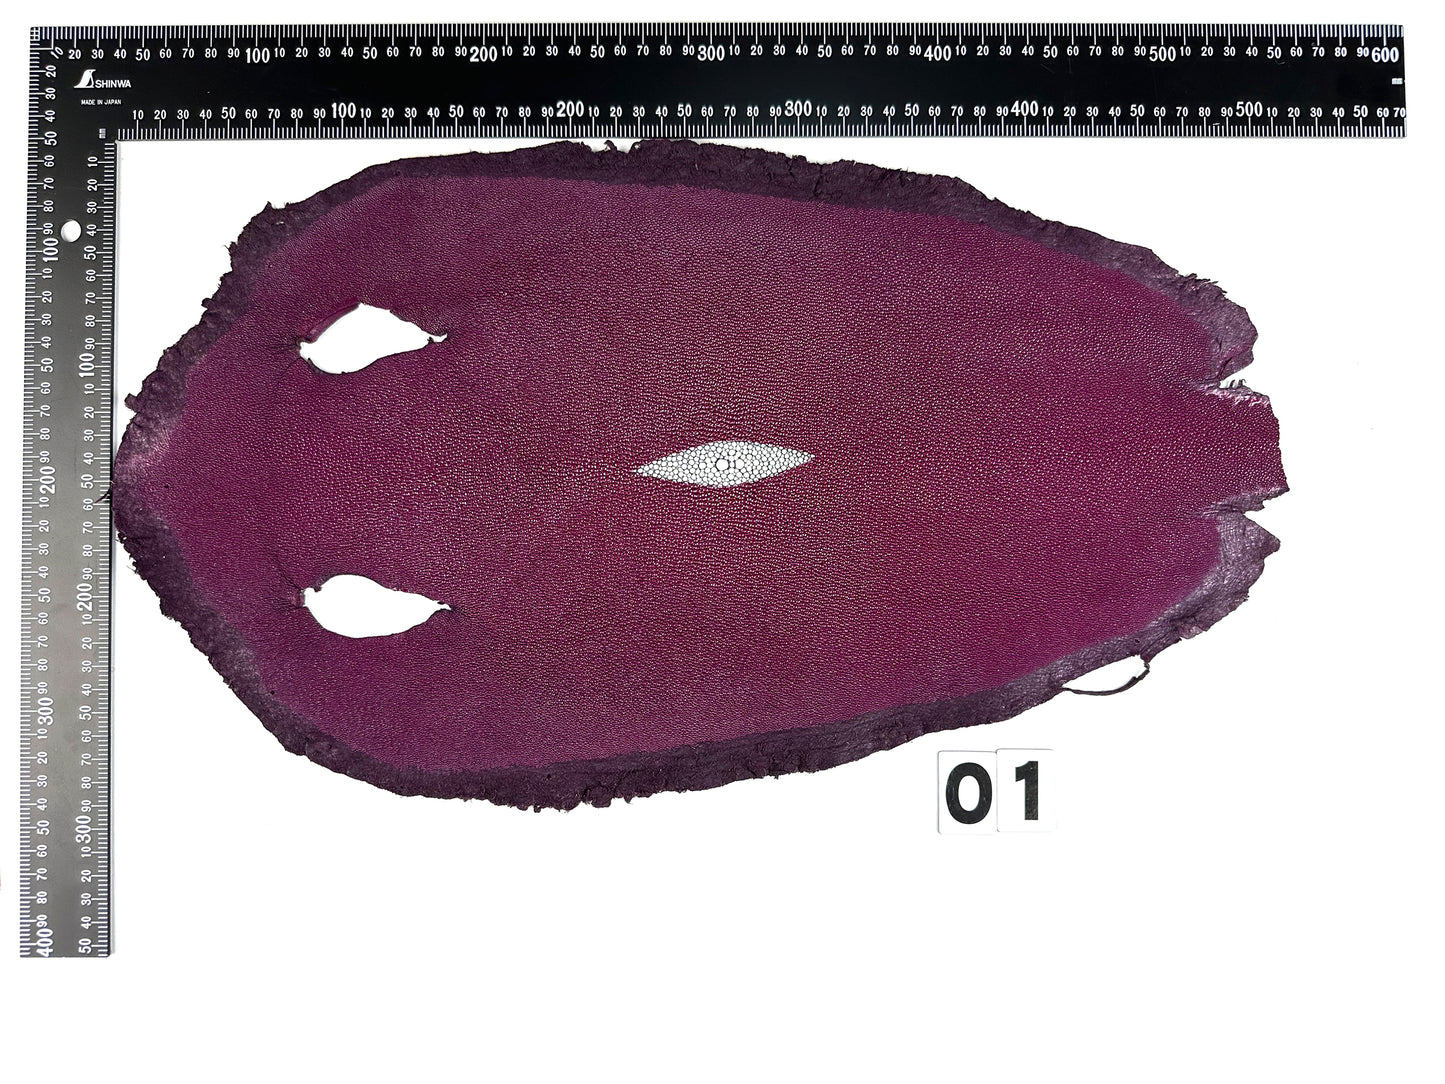 Stingray leather 9inch #8 Purple